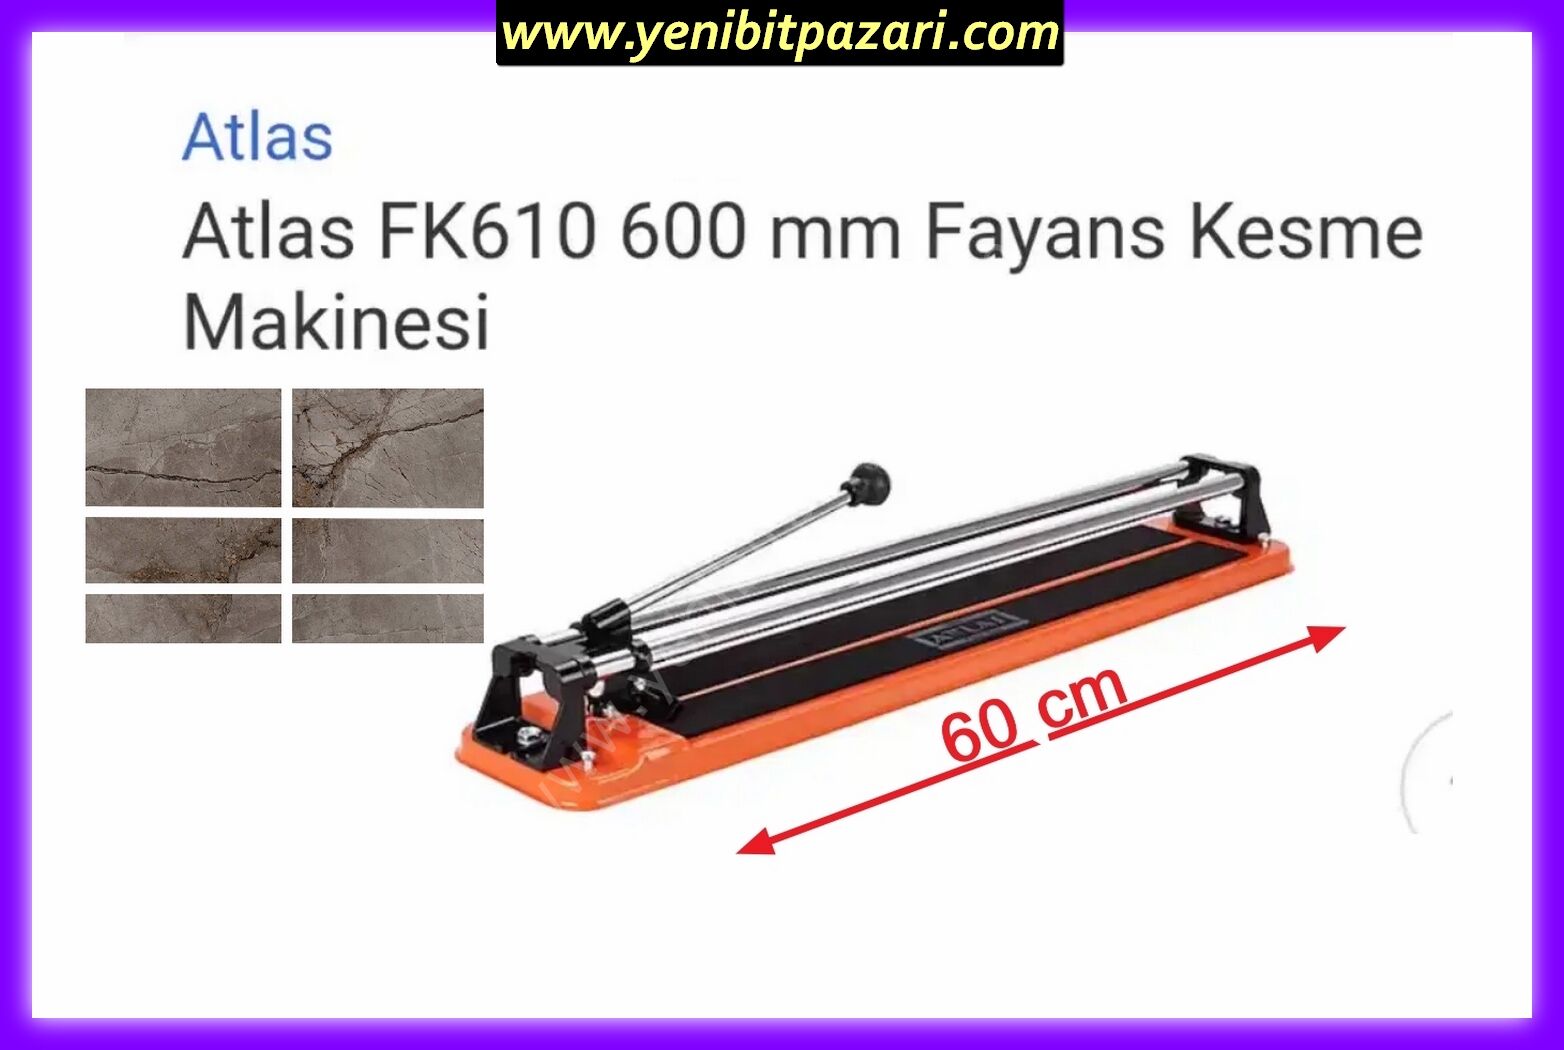 Attlas Eco Fk 610 Fayans seramik Kesme makinası fayans kesme 60 cm 600mm